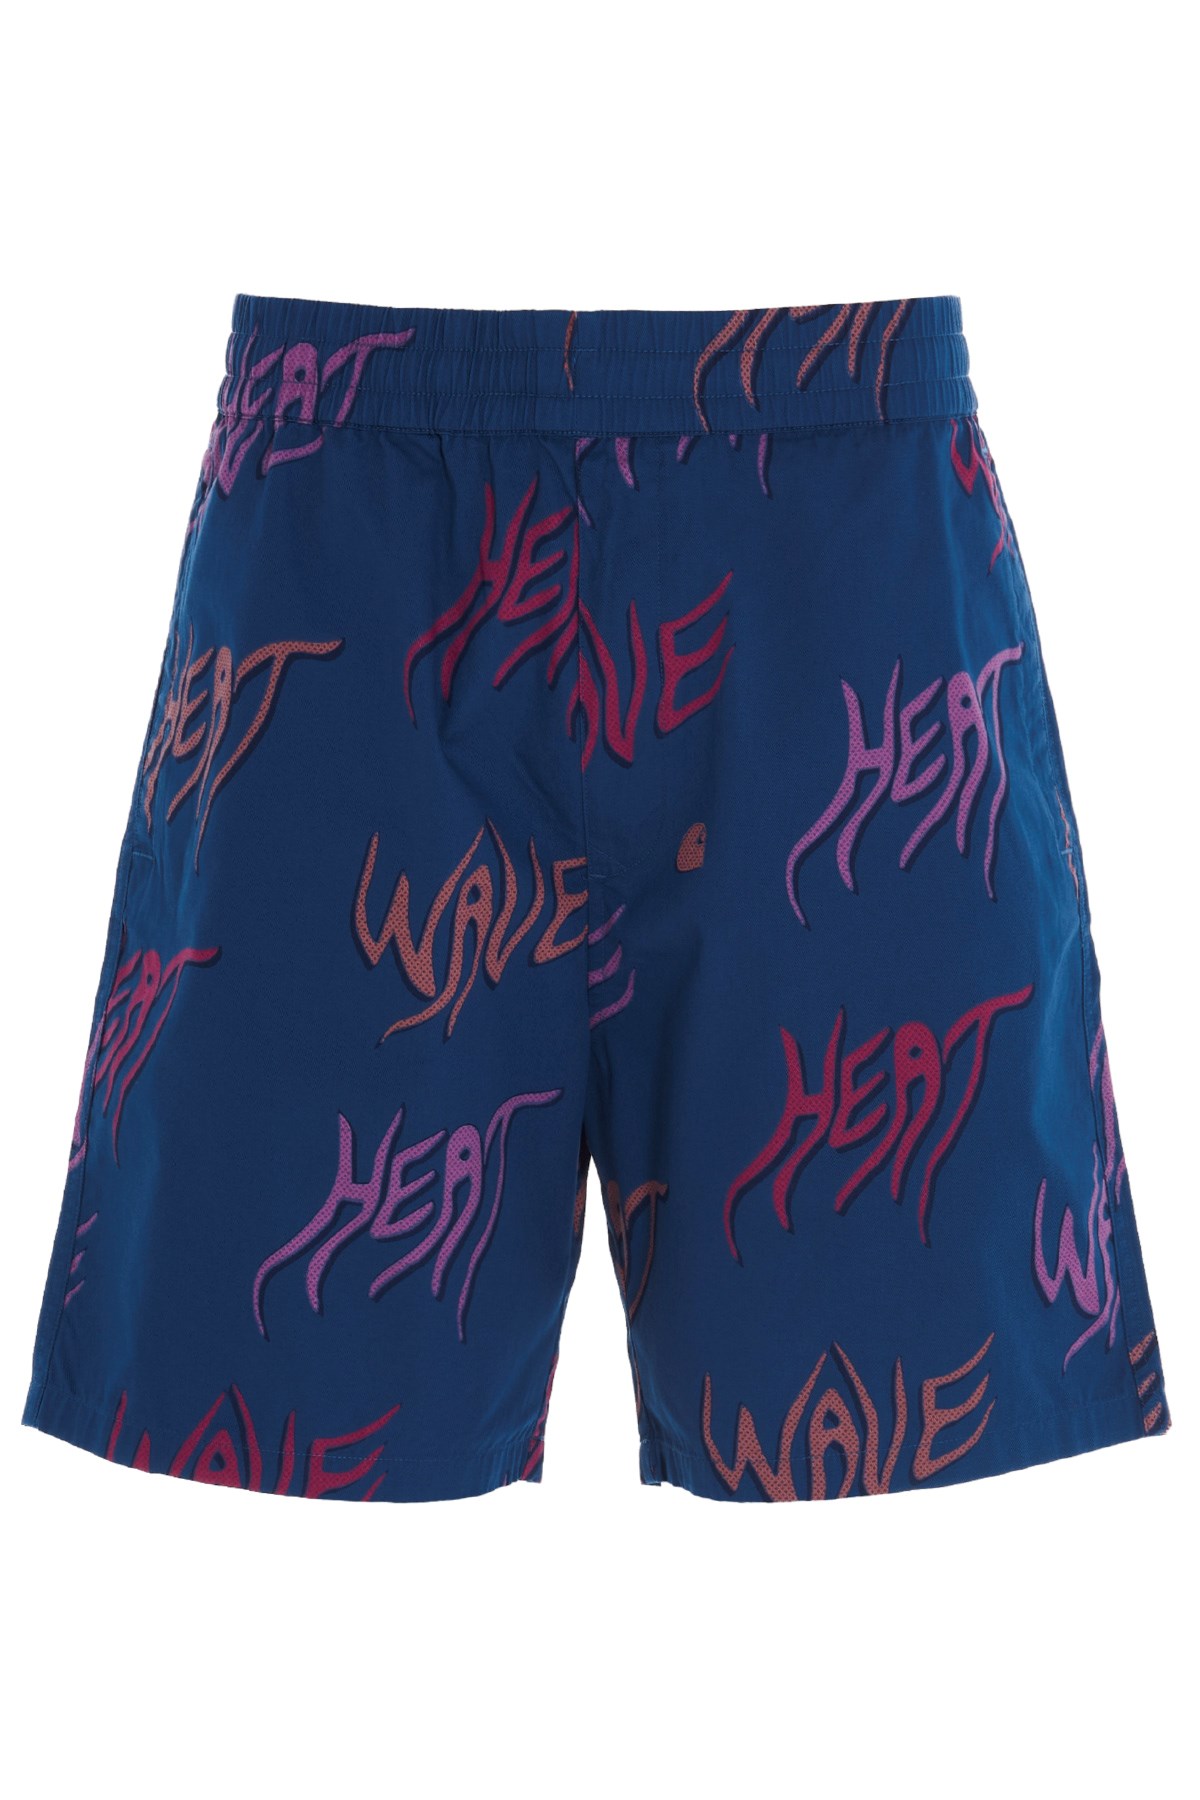 CARHARTT WIP 'Wave’ Bermuda Shorts